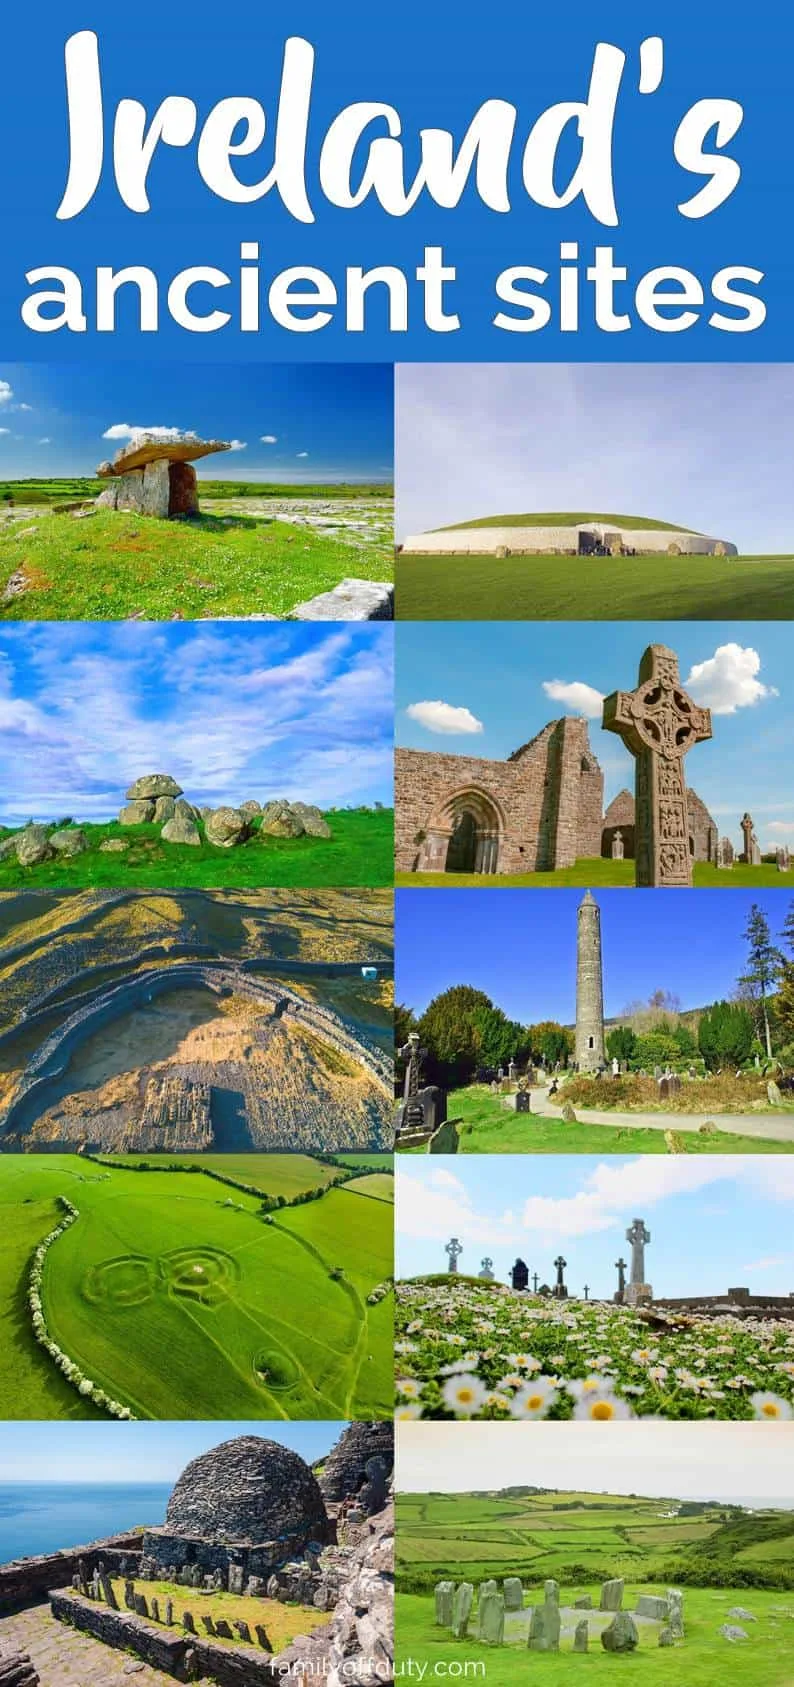 Ireland's ancient site worth visiting